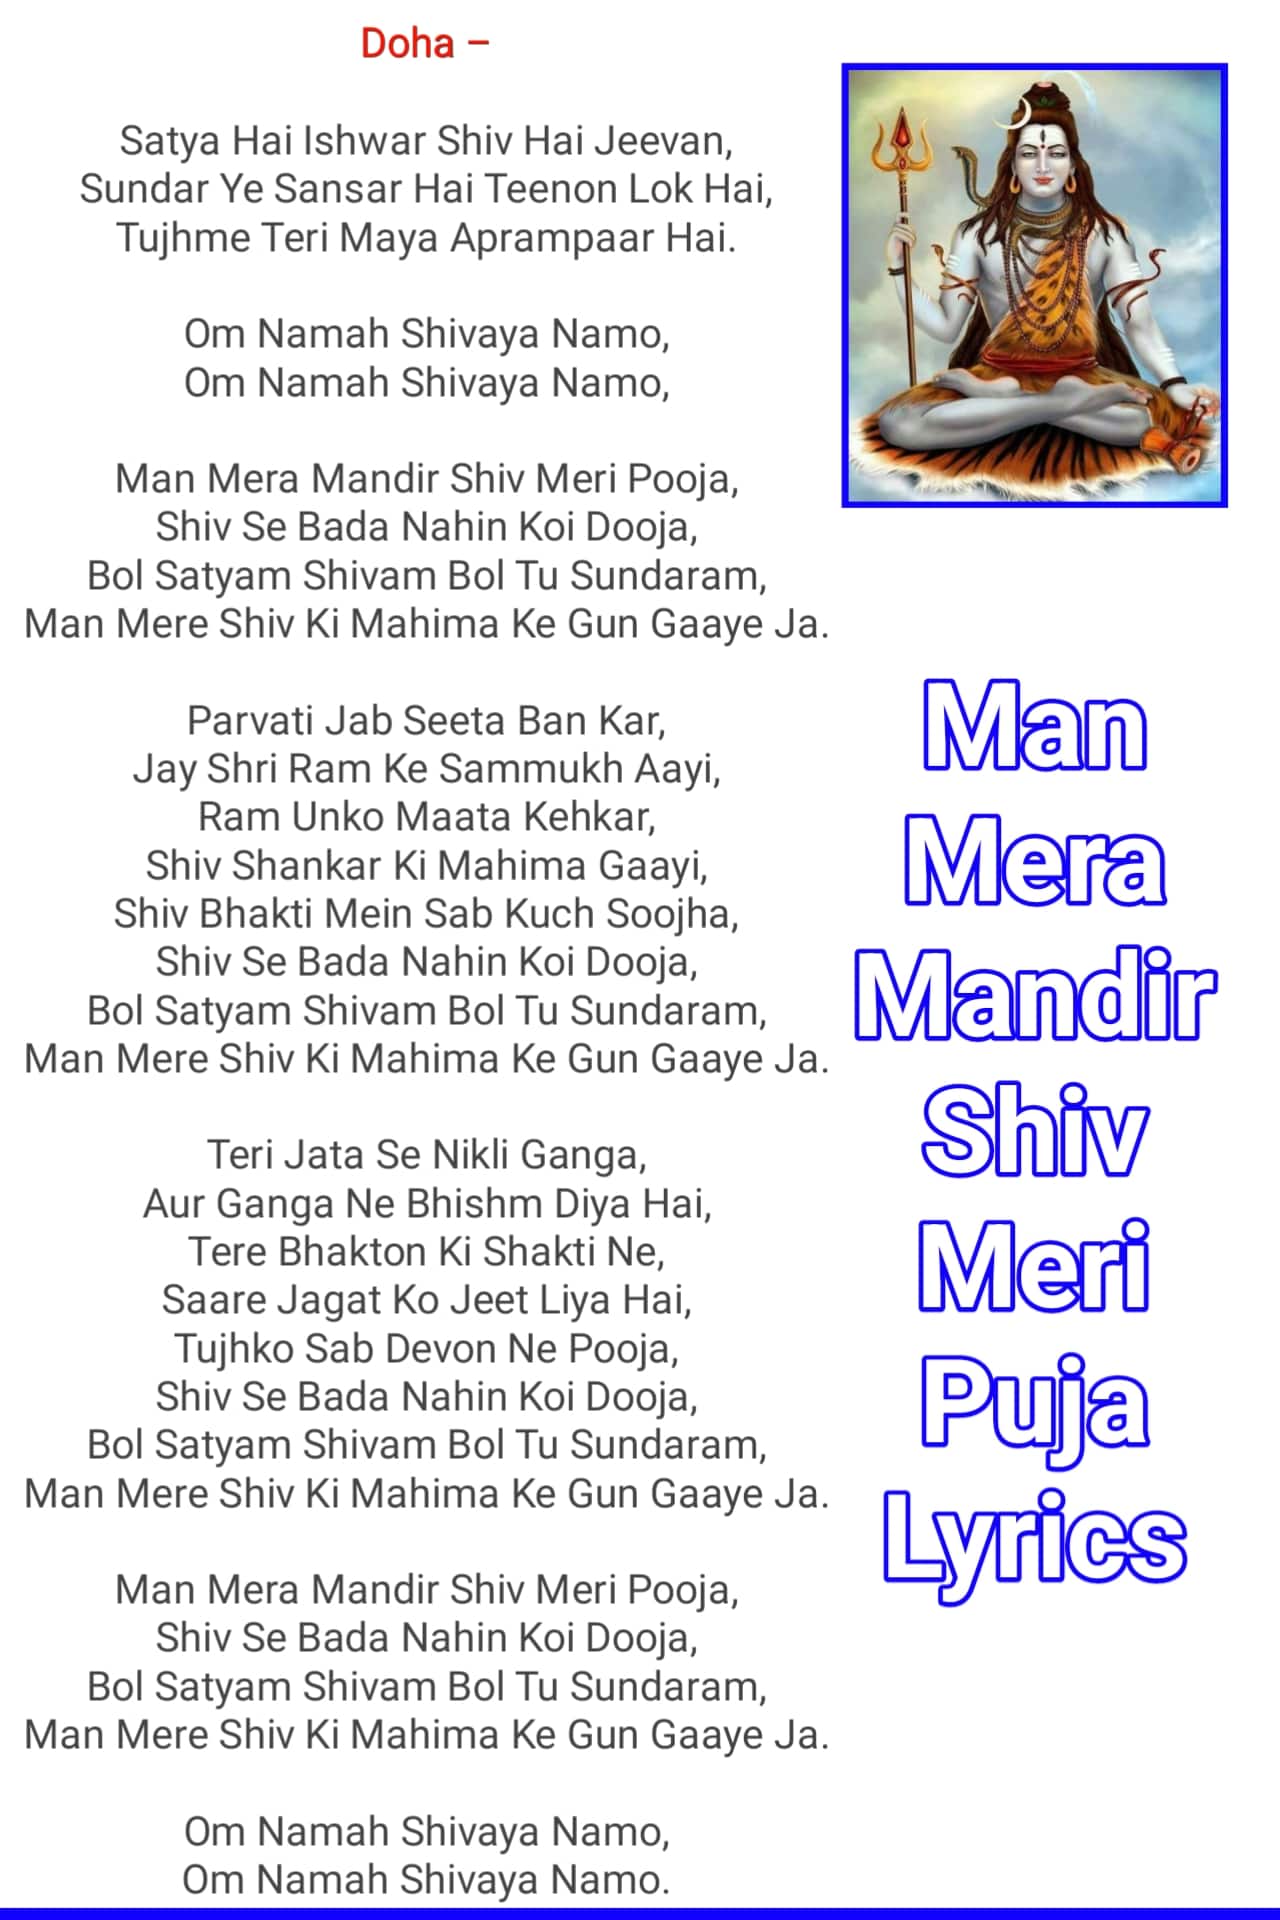 Man Mera Mandir Shiv Meri Puja Lyrics